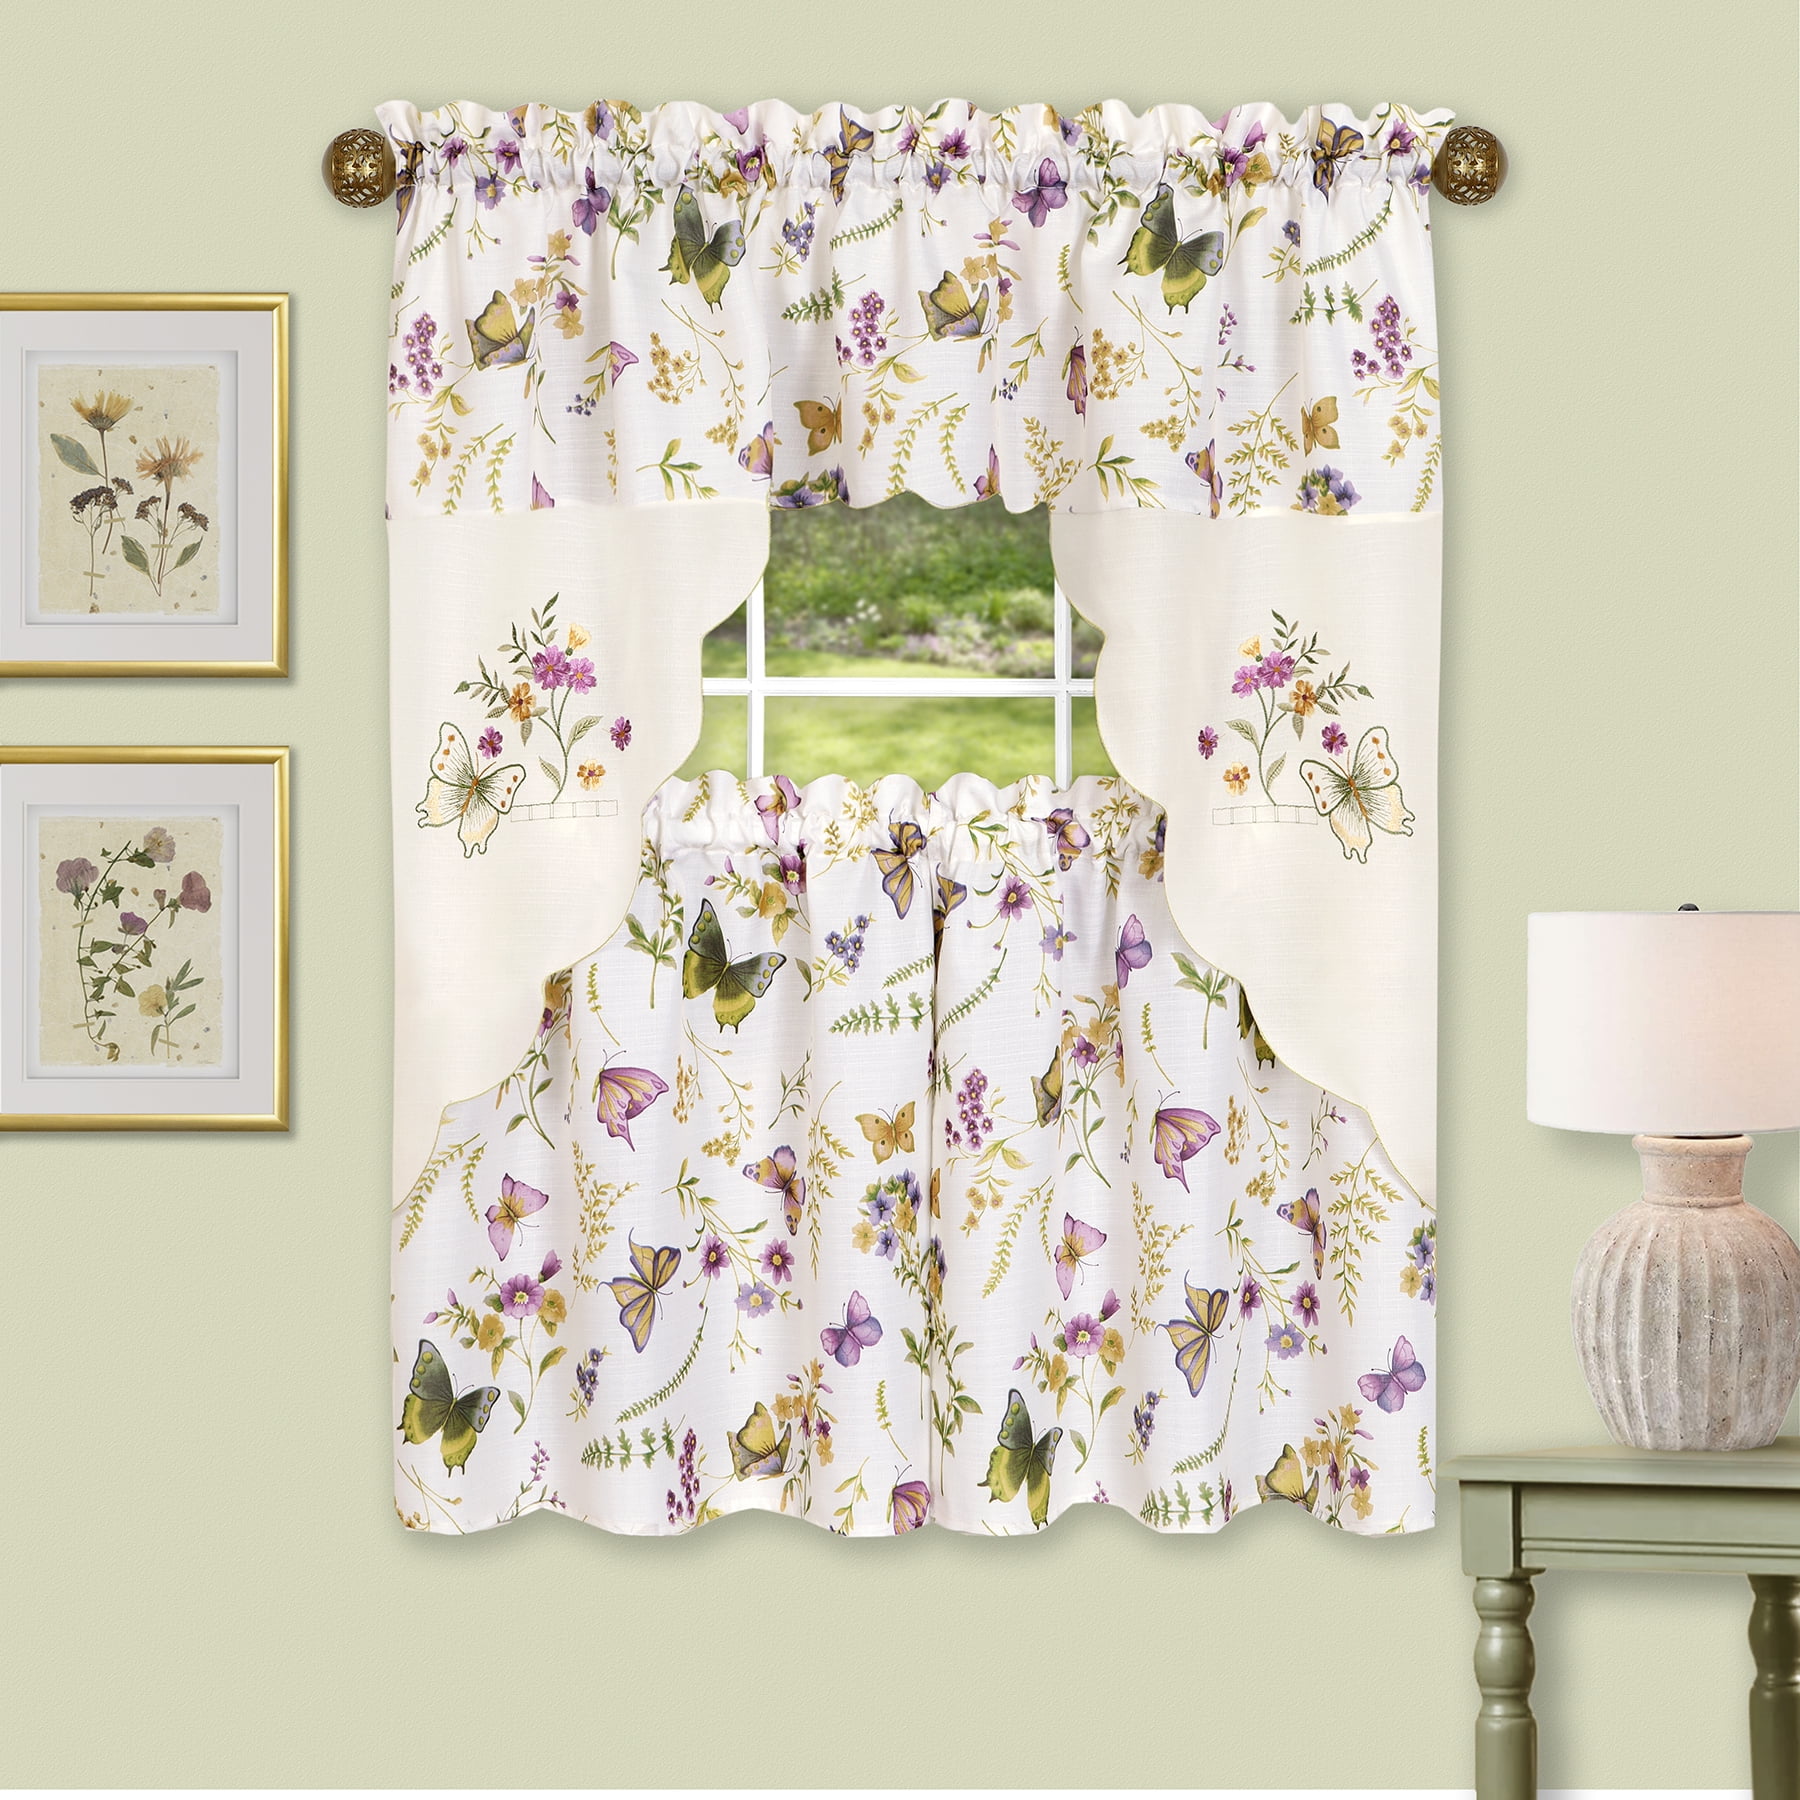 Achim Home Furnishings Rose Embellished Cottage Window Curtain Set Multicolor 58 x 24